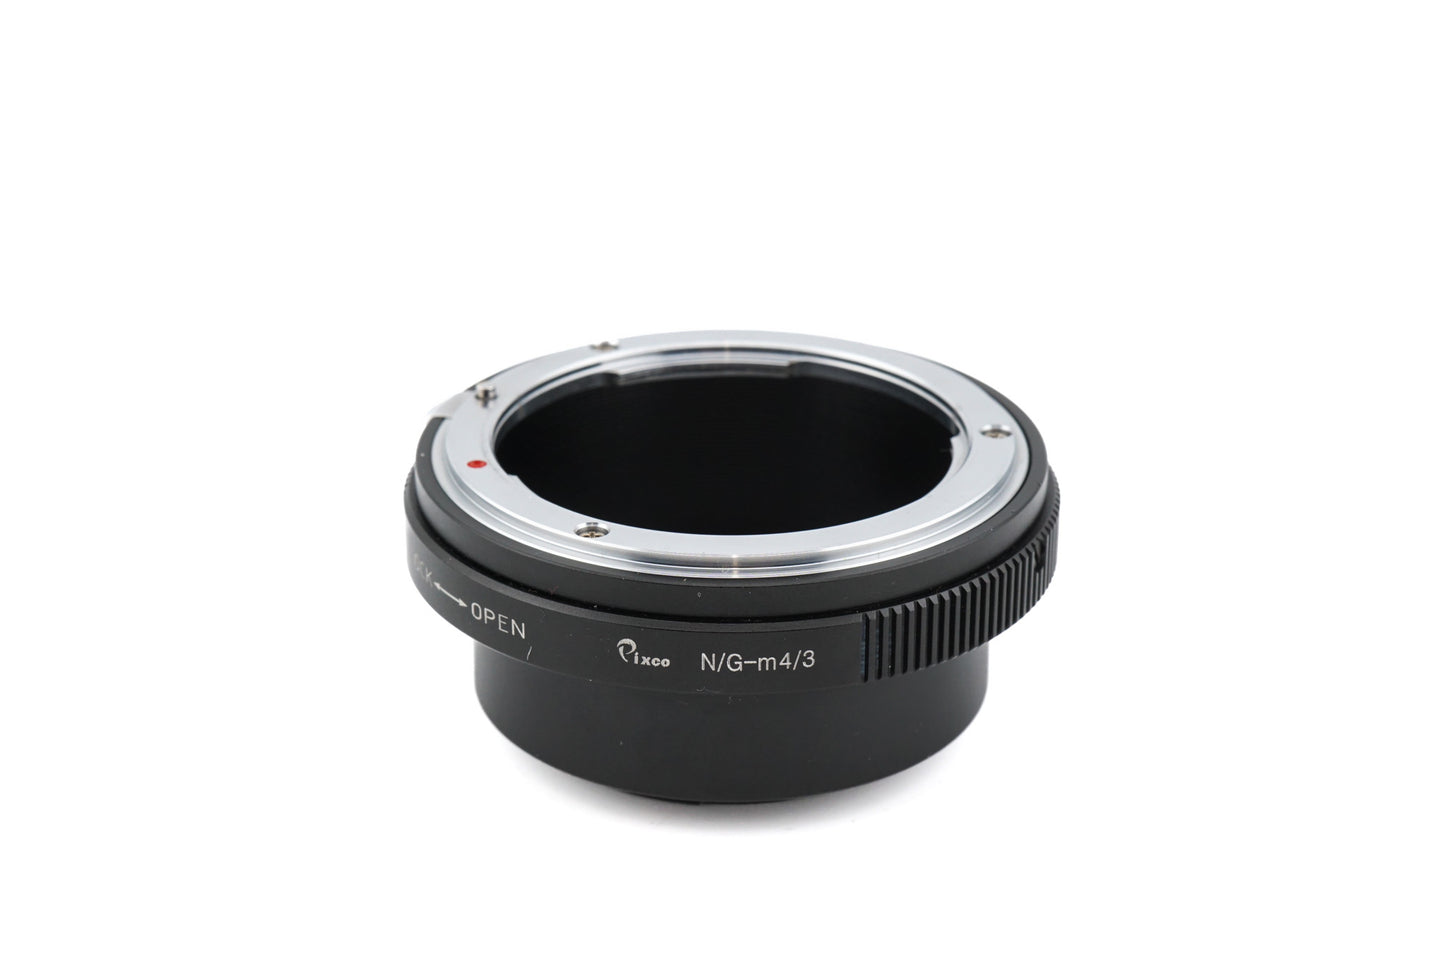 Pixco Nikon F(G) - M4/3 (N/G-m4/3) Adapter - Lens Adapter